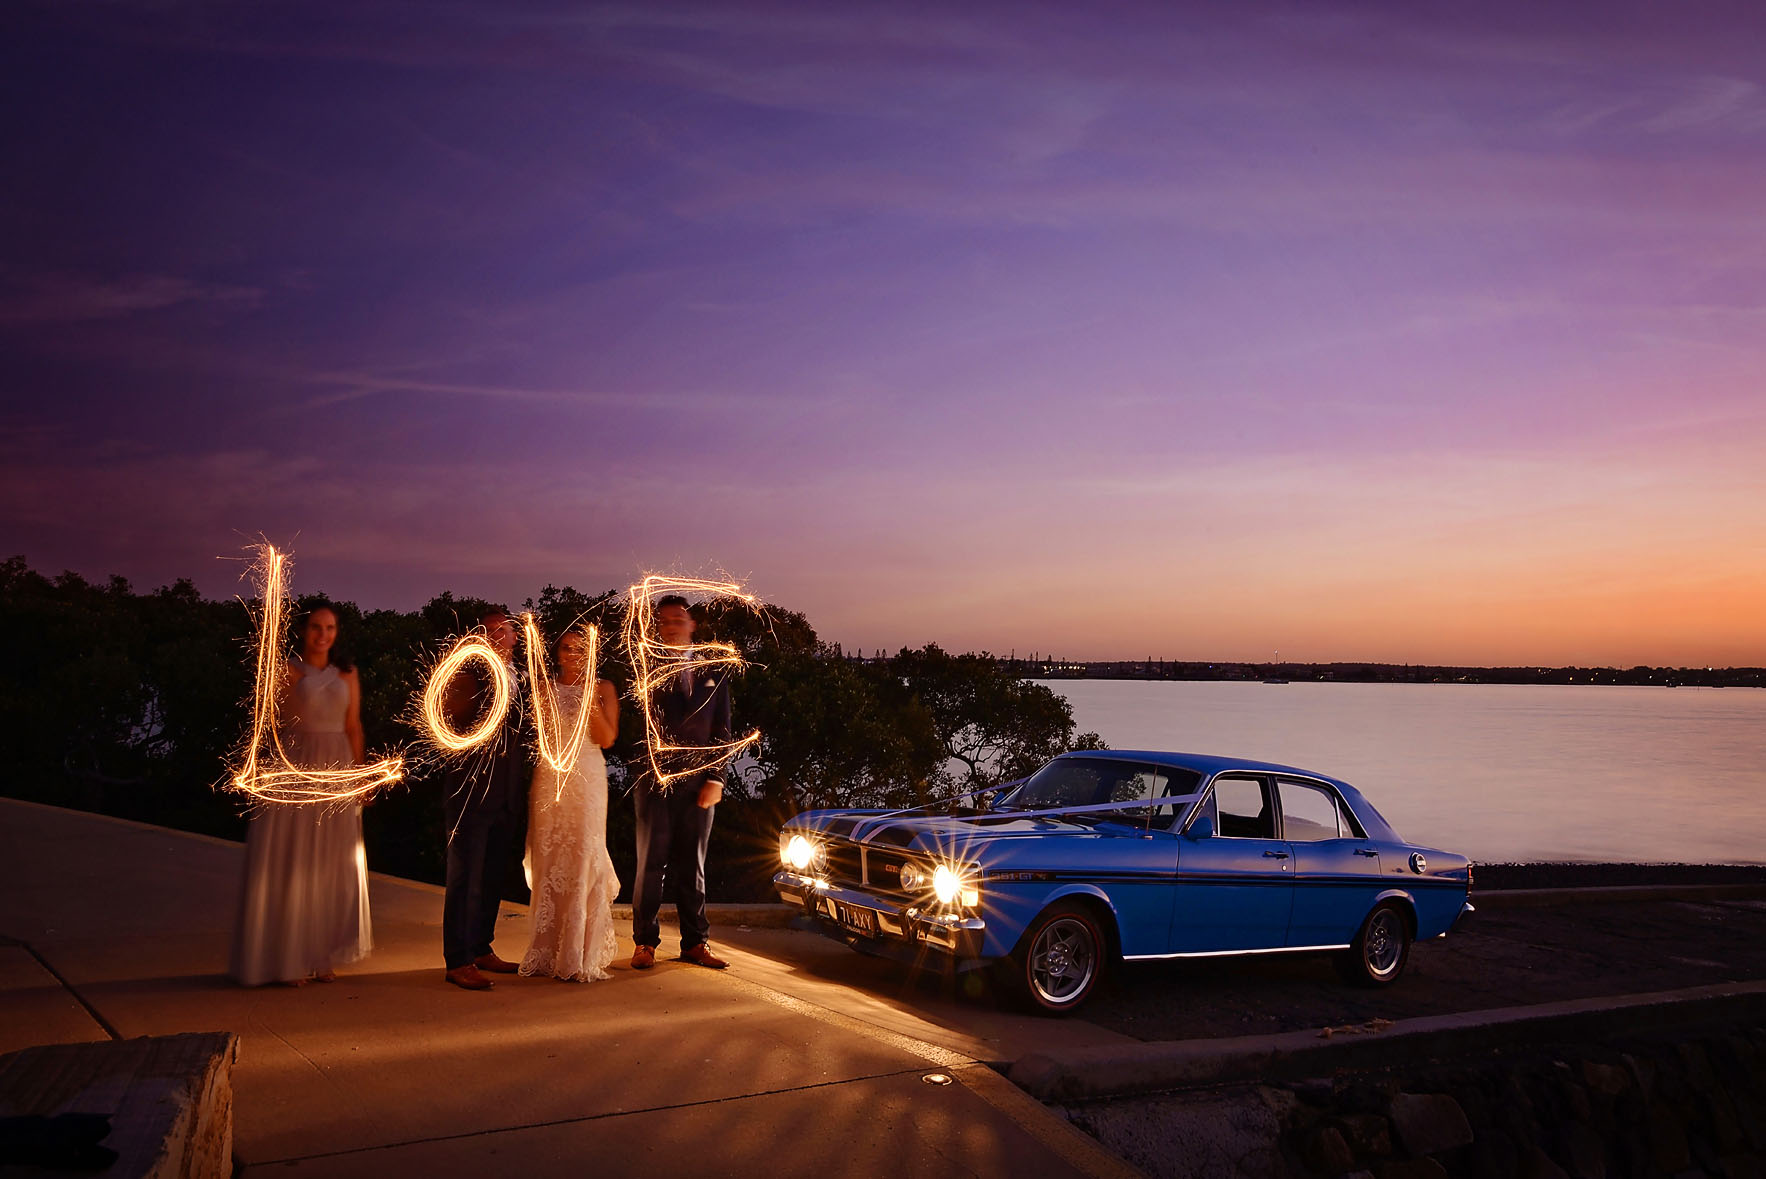 redland wedding best photographer affordable fun